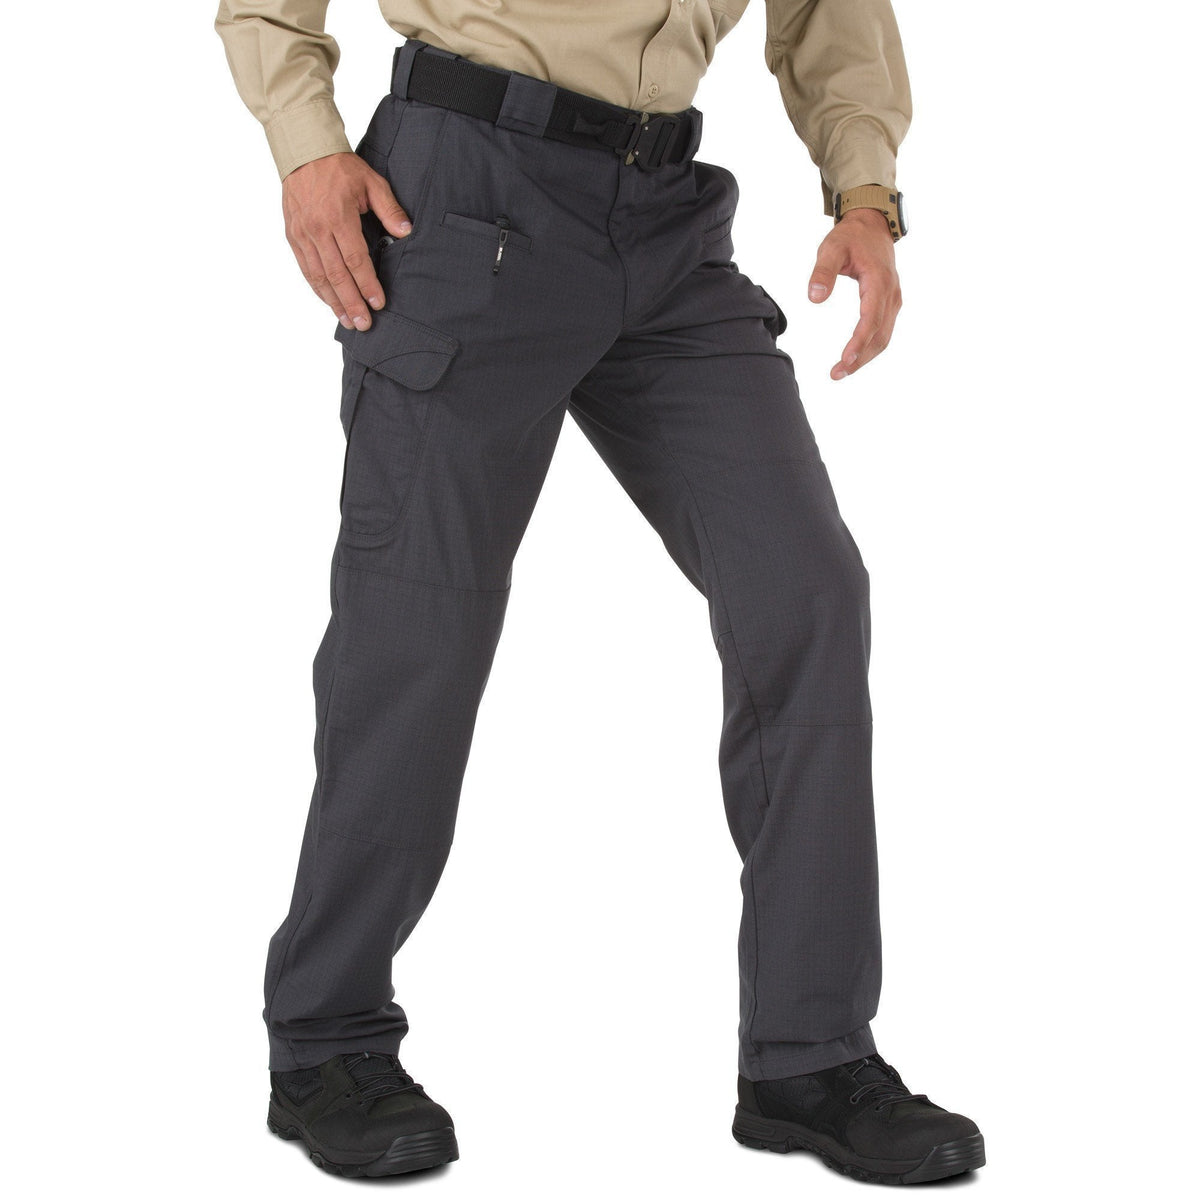 5.11 Tactical Stryke Pants with Flex-Tac - Charcoal Pants 5.11 Tactical 28 30 Tactical Gear Supplier Tactical Distributors Australia